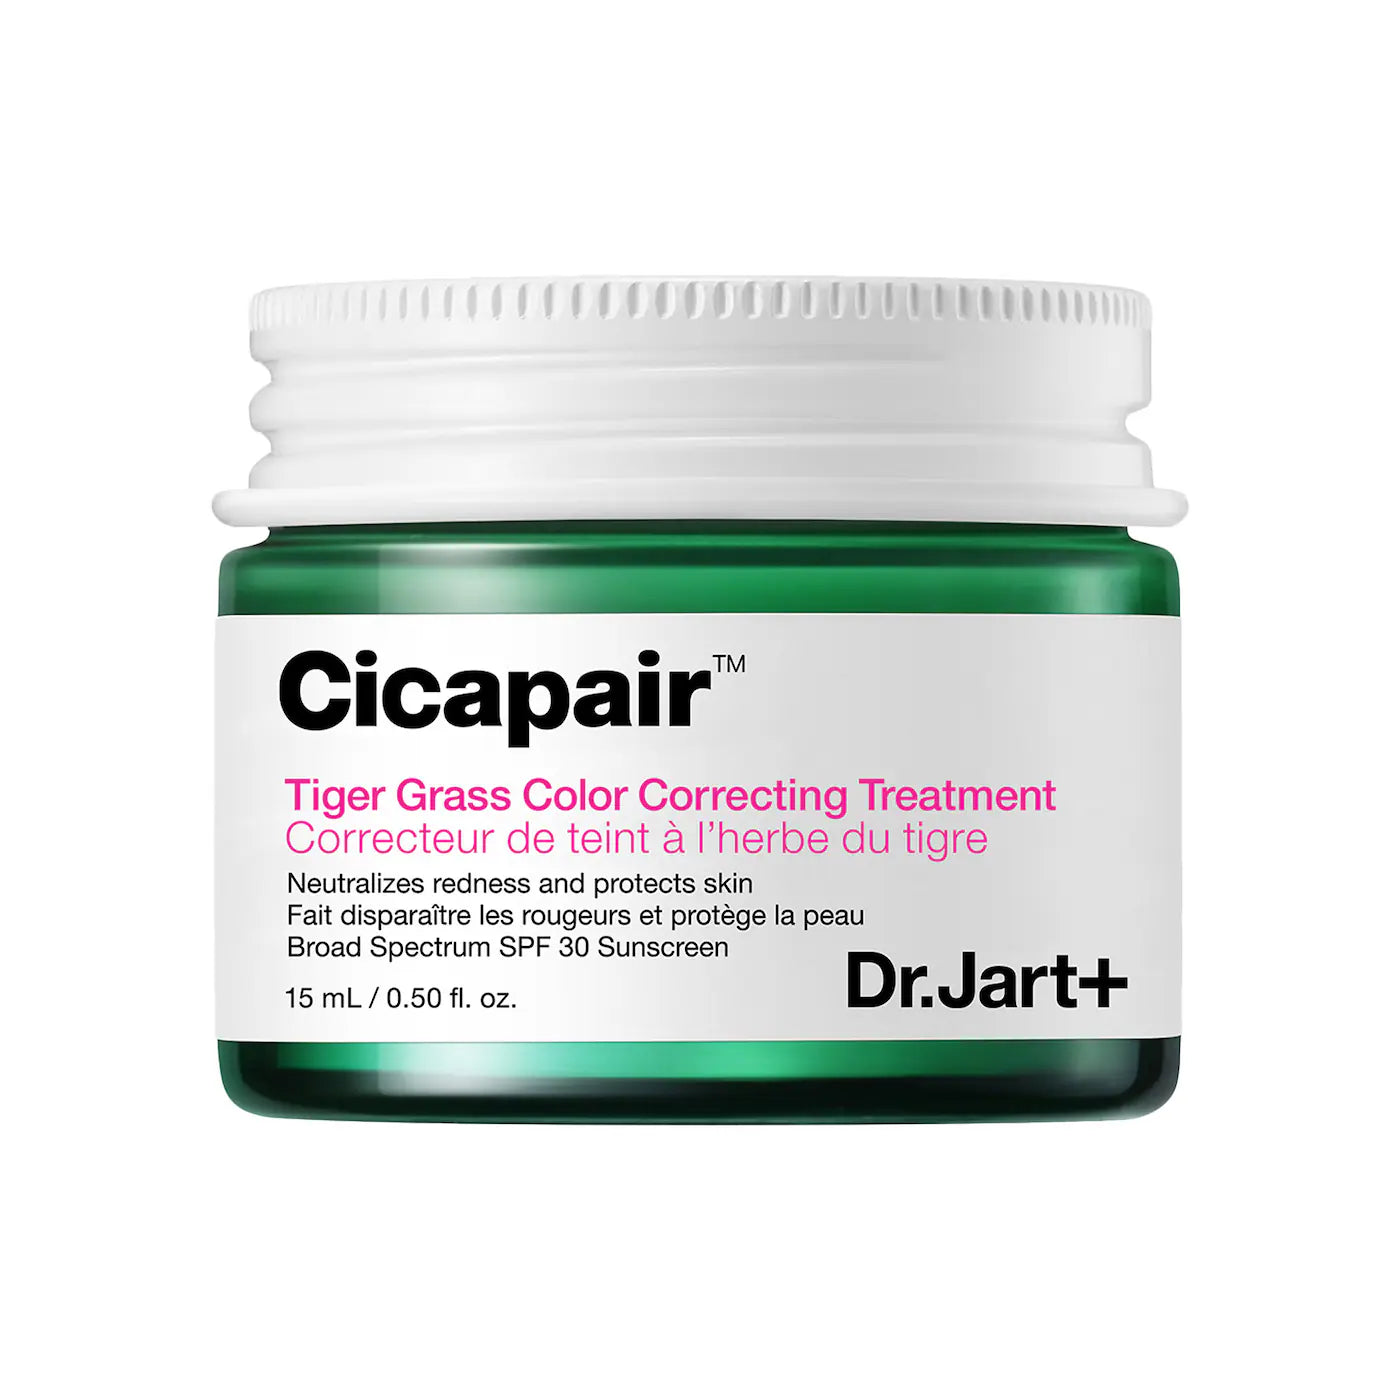 Mini Cicapair™ Tiger Grass Color Correcting Treatment | Dr. Jart+